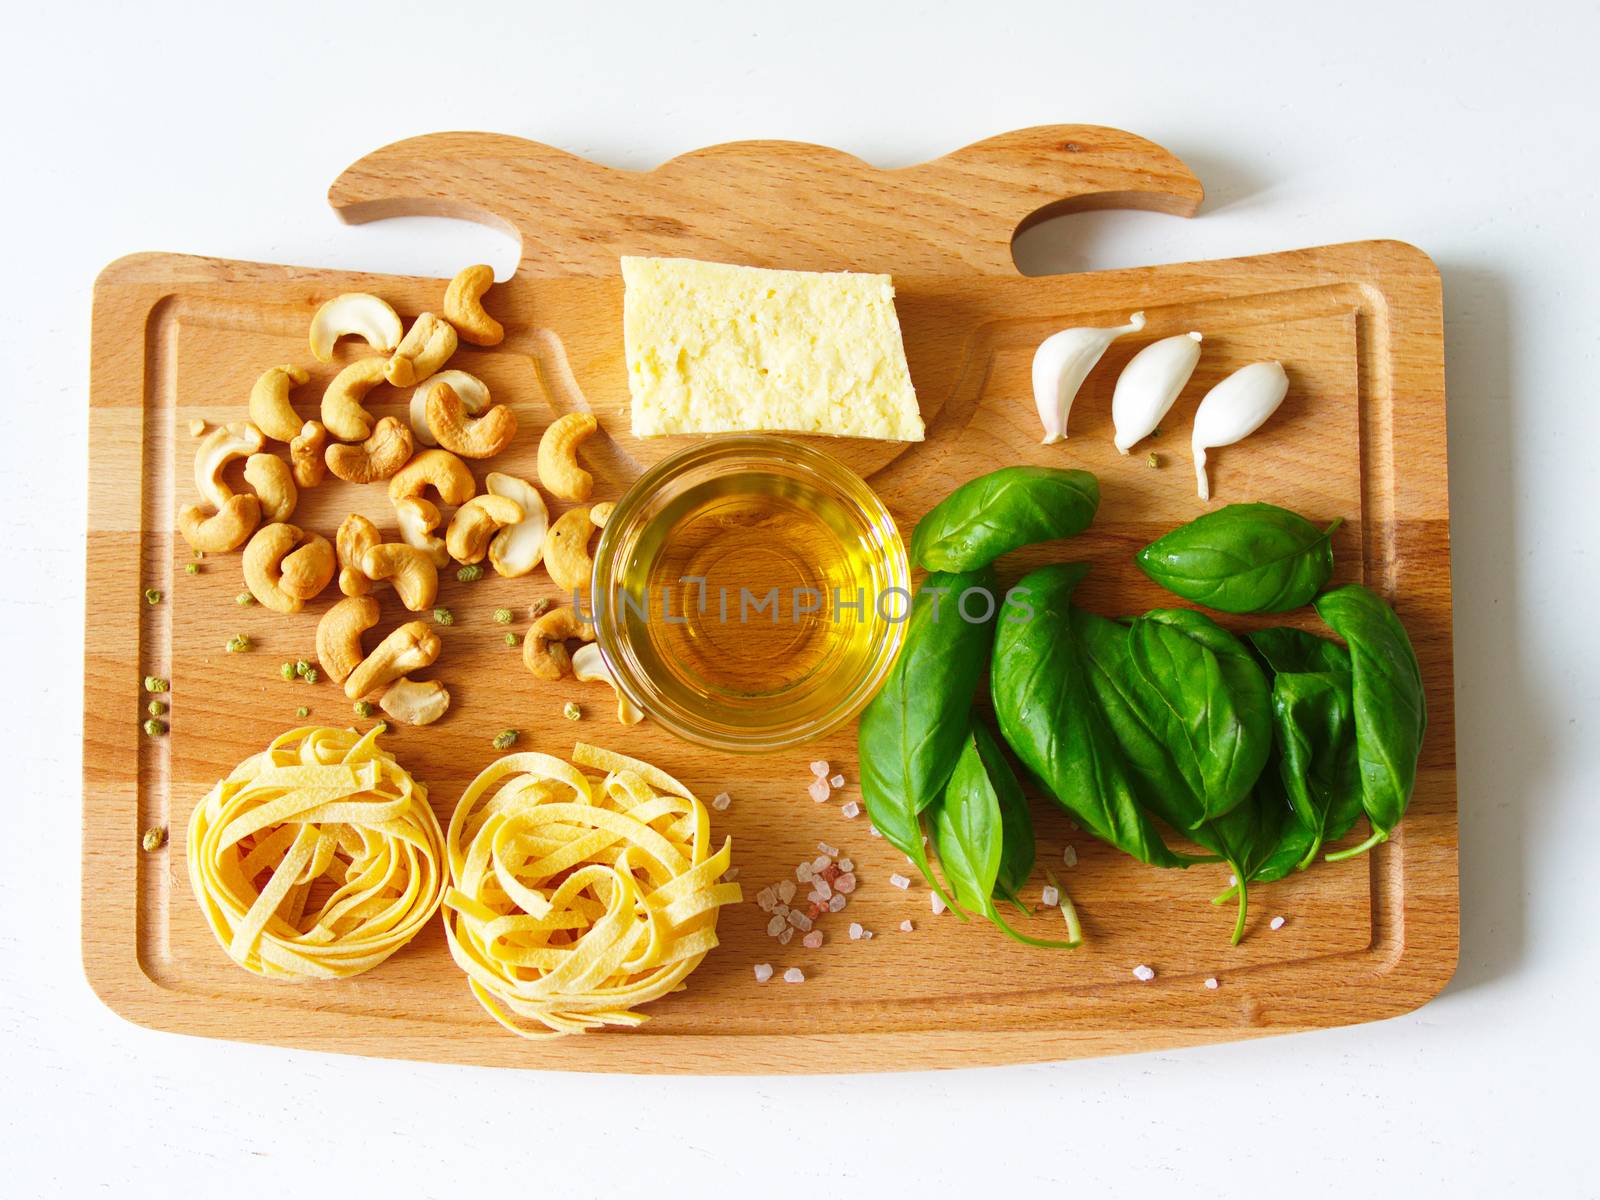 Fettuccine pasta ingredients by yebeka